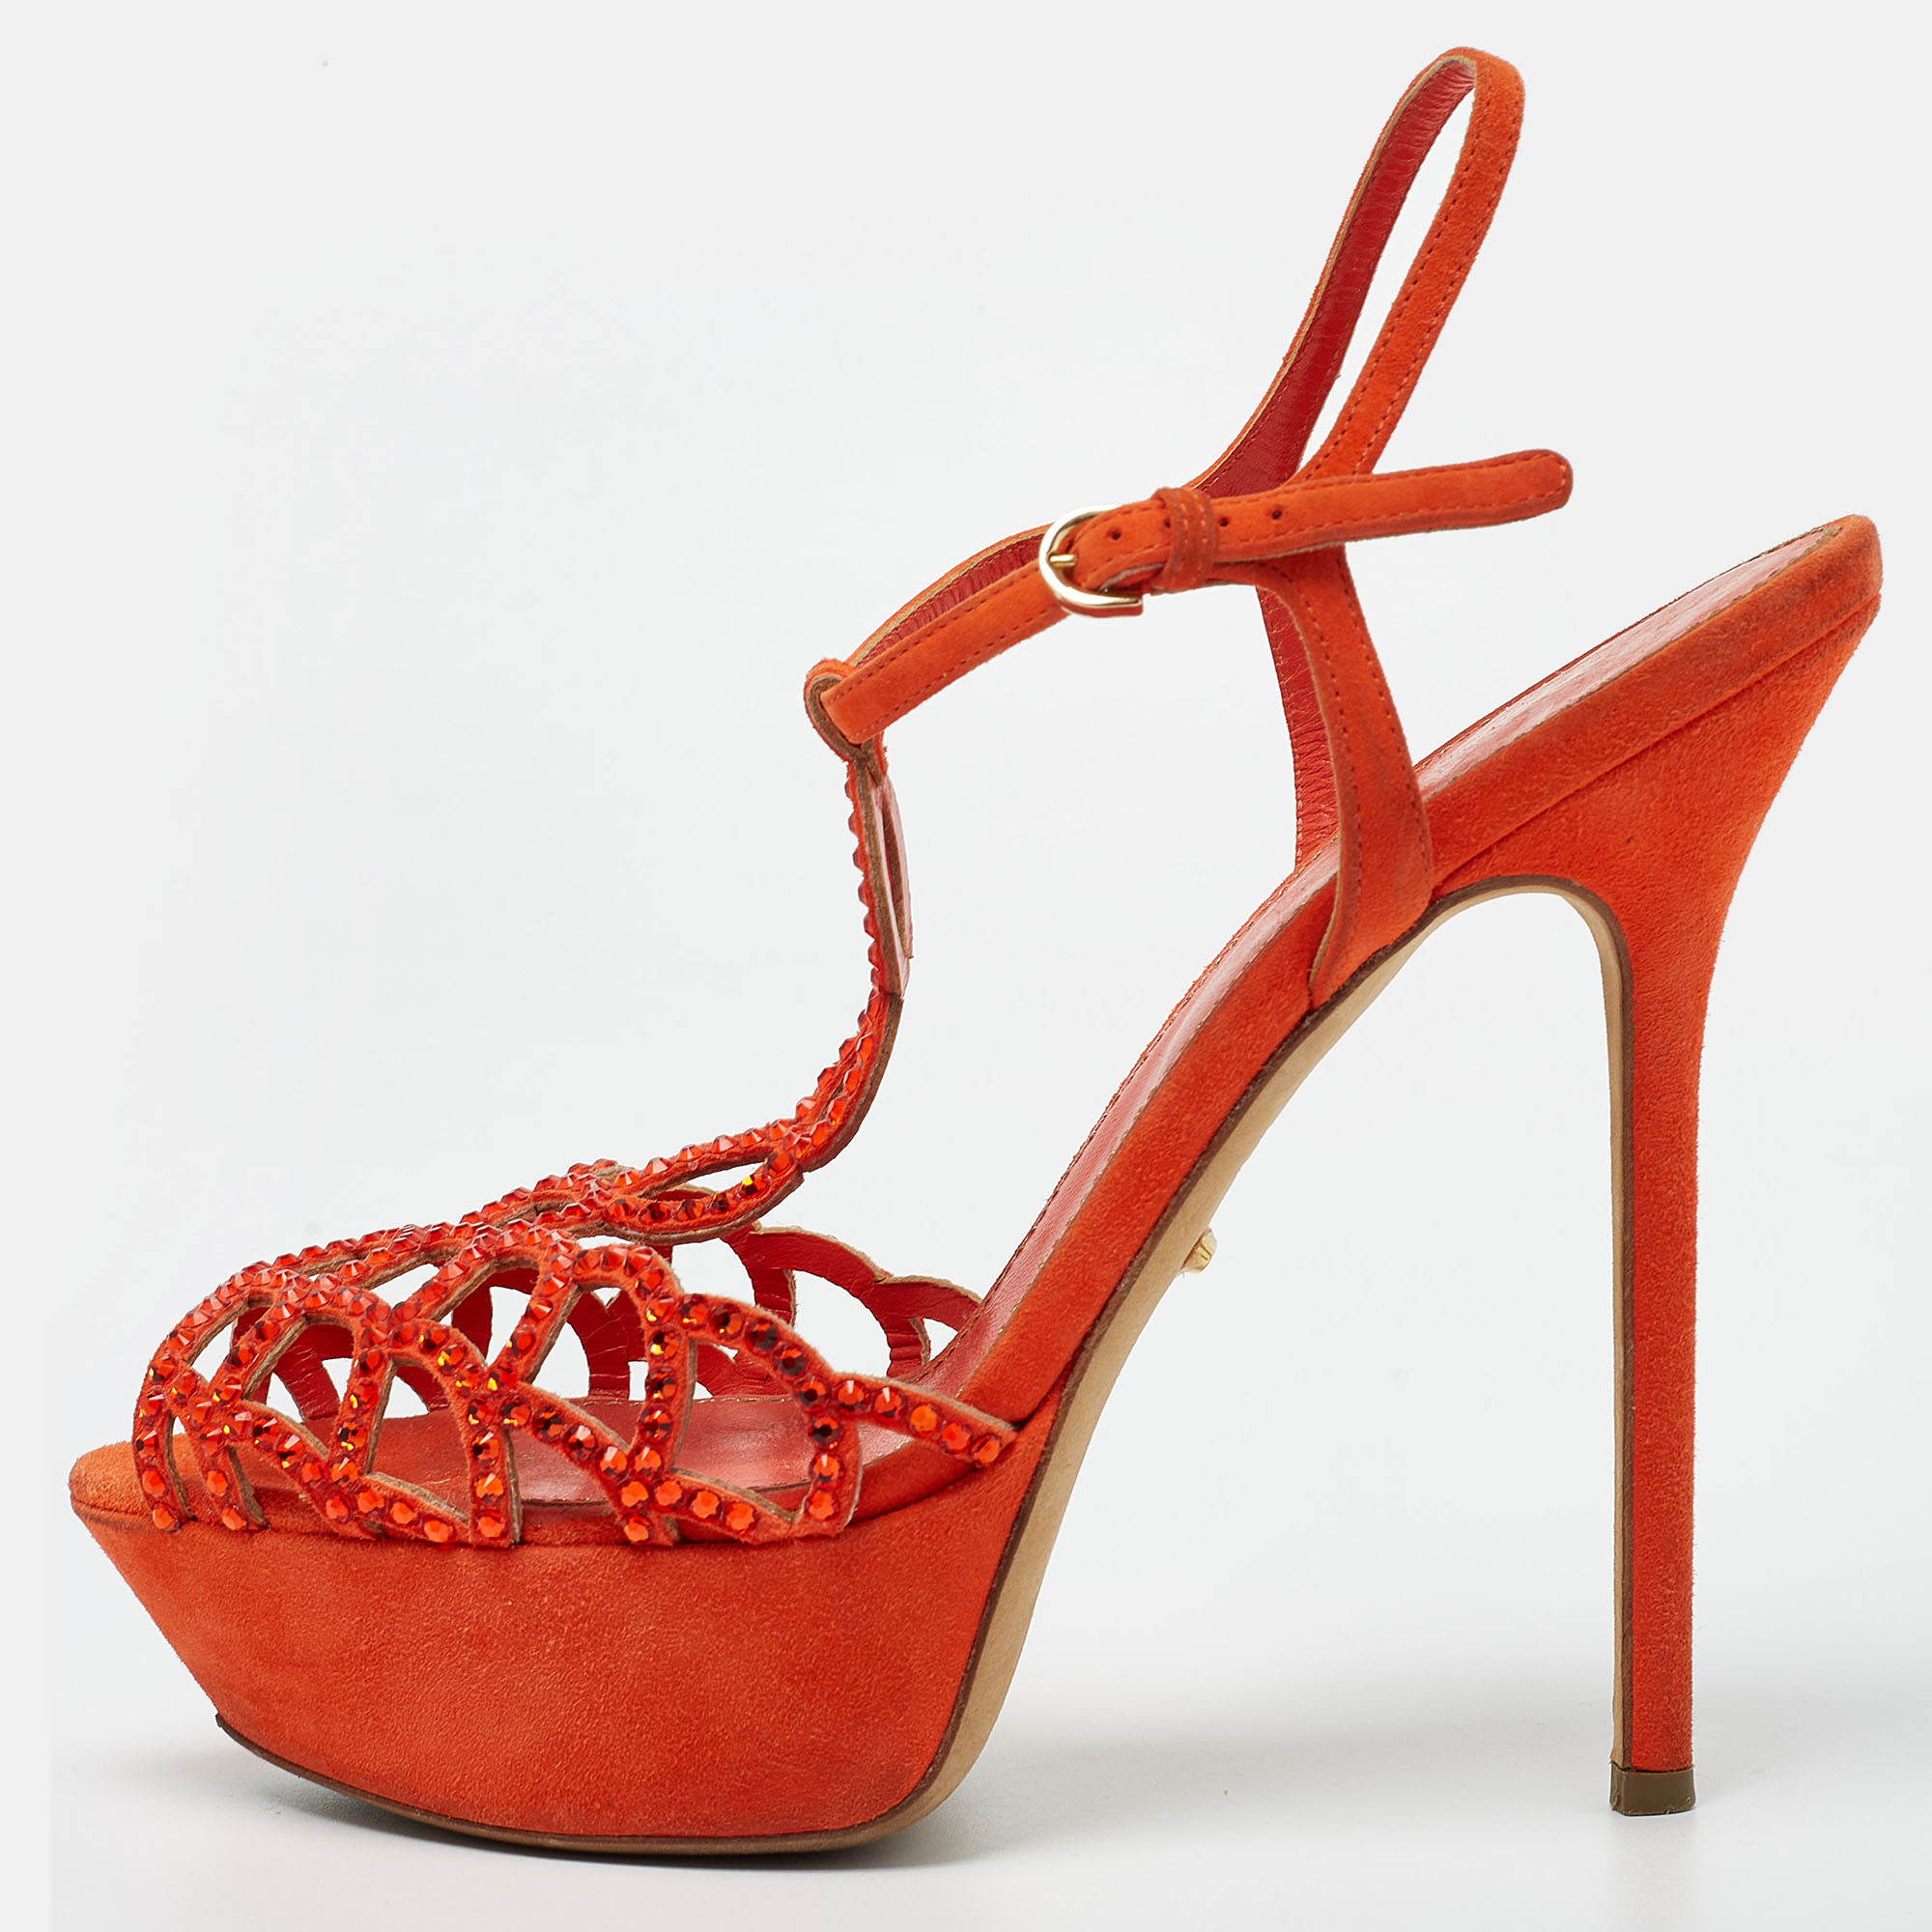 Sergio rossi orange suede and crystal embellished strappy scalloped platform sandals size 38.5